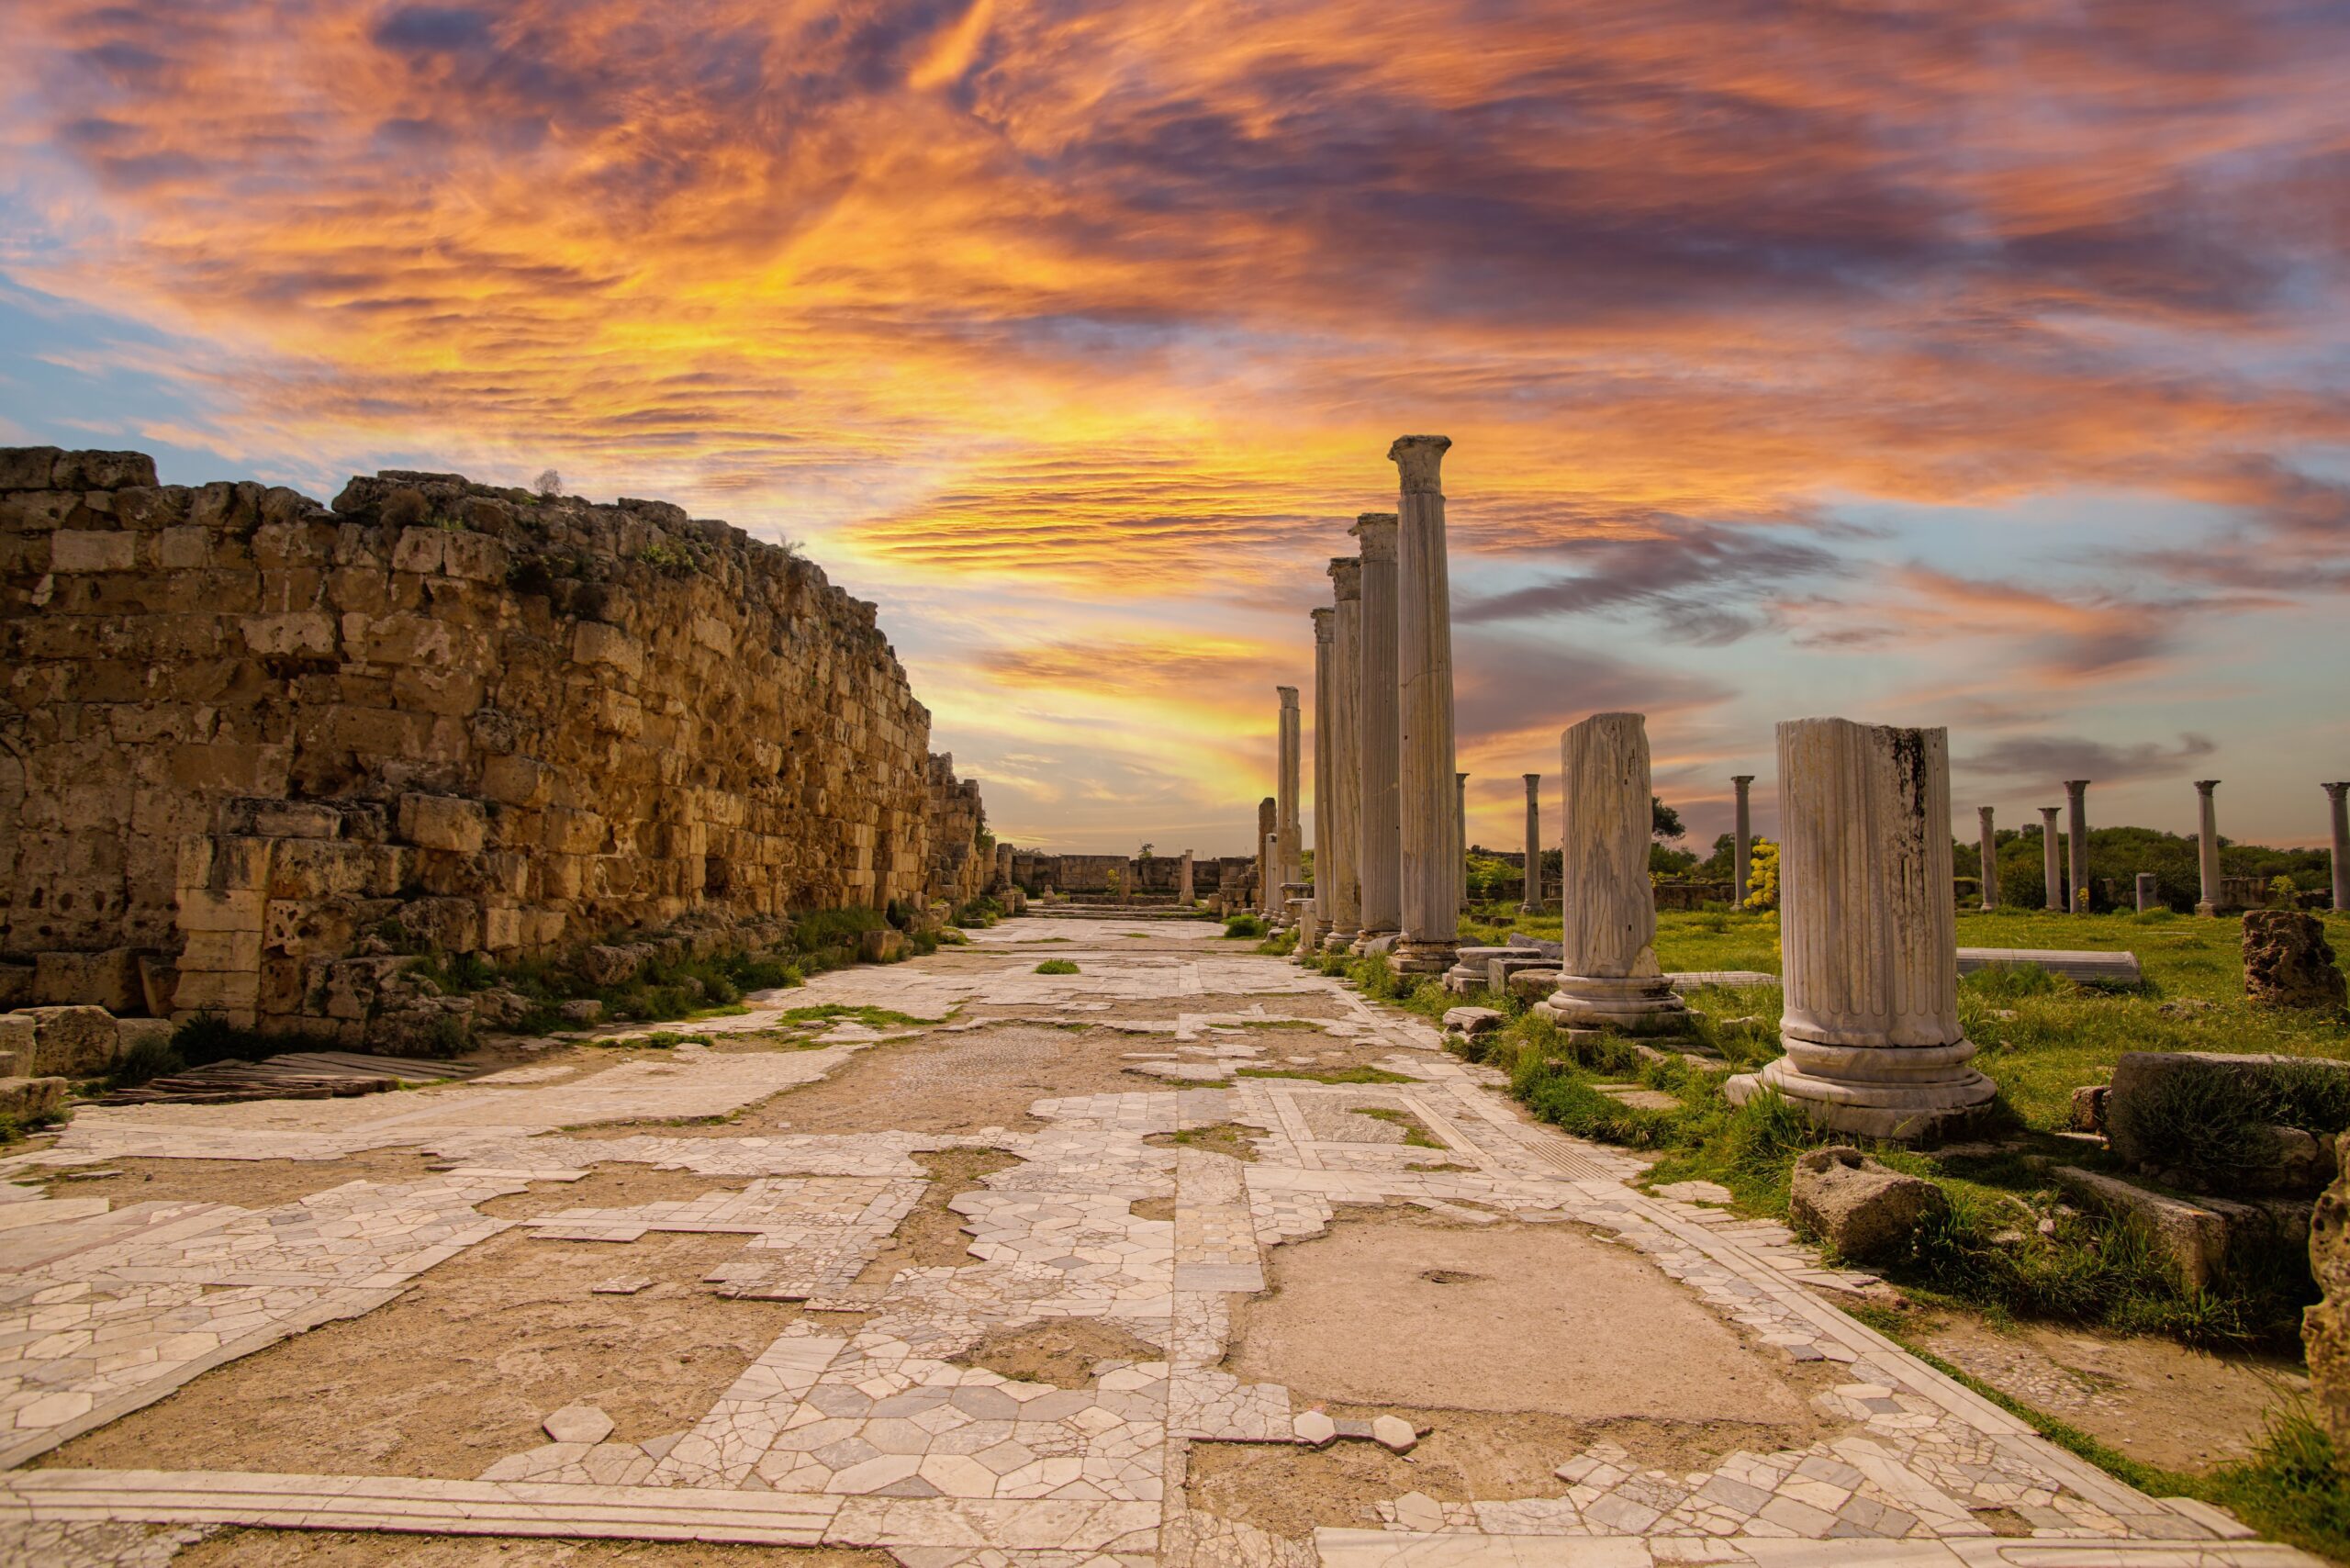 Sunset illuminating ancient columns in Salamis ruins, Famagusta, Cyprus.